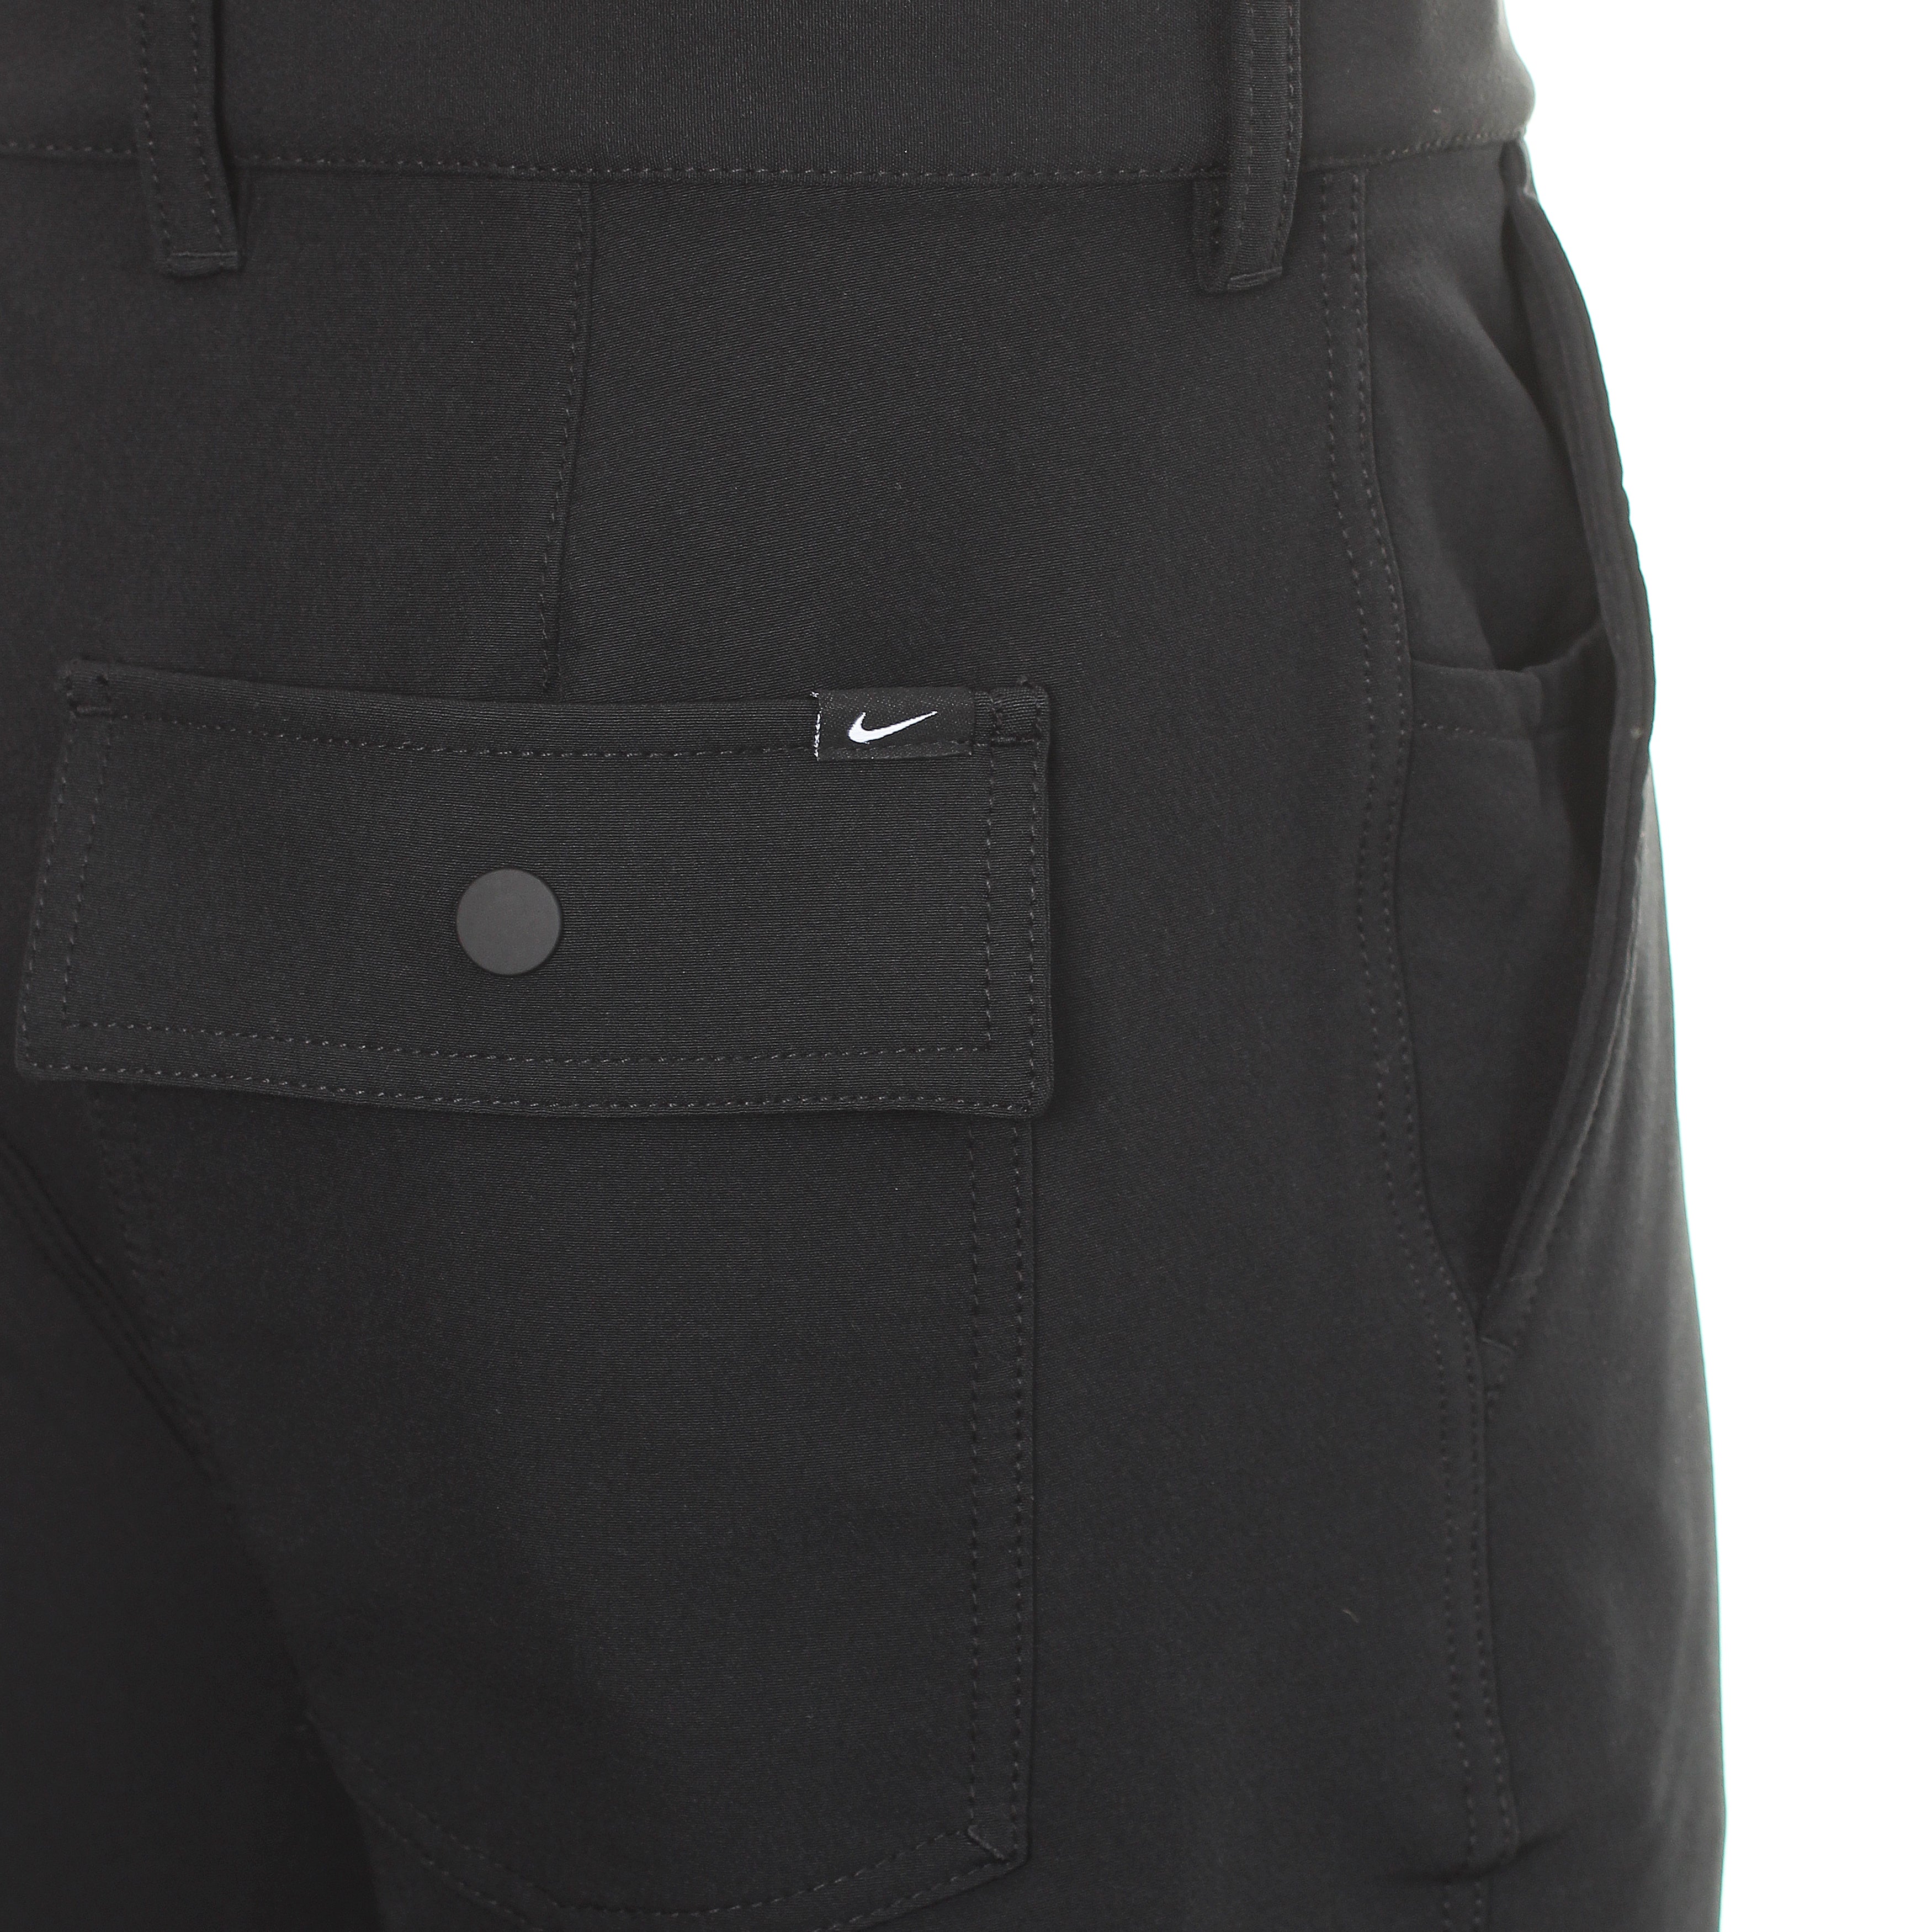 NIKE Men's Repel Utility Weatherized Golf Pants